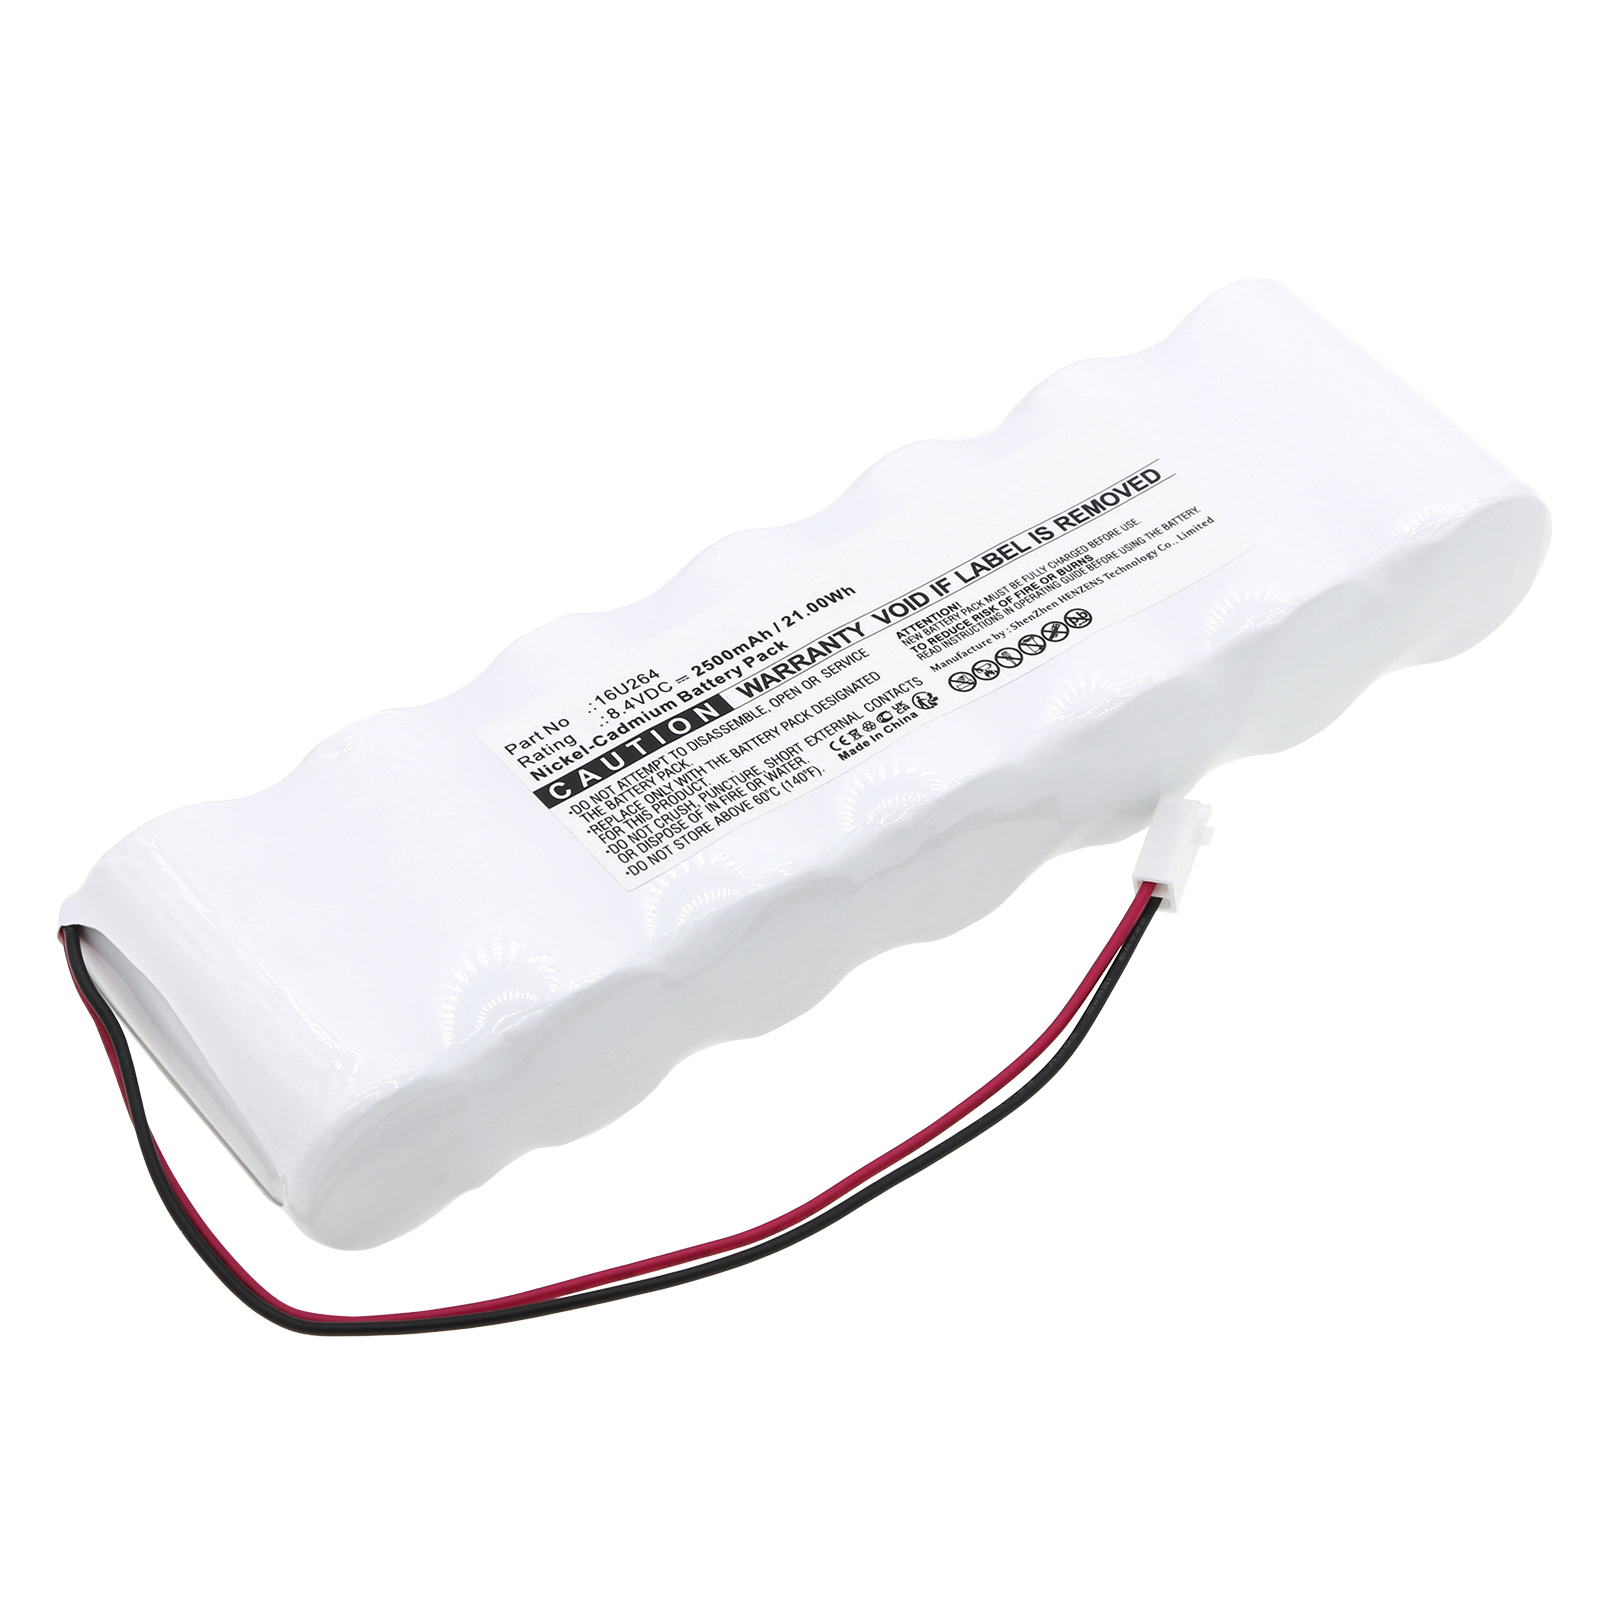 Synergy Digital Emergency Lighting Battery, Compatible with DUAL-LITE 16U264 Emergency Lighting Battery (Ni-CD, 8.4V, 2500mAh)